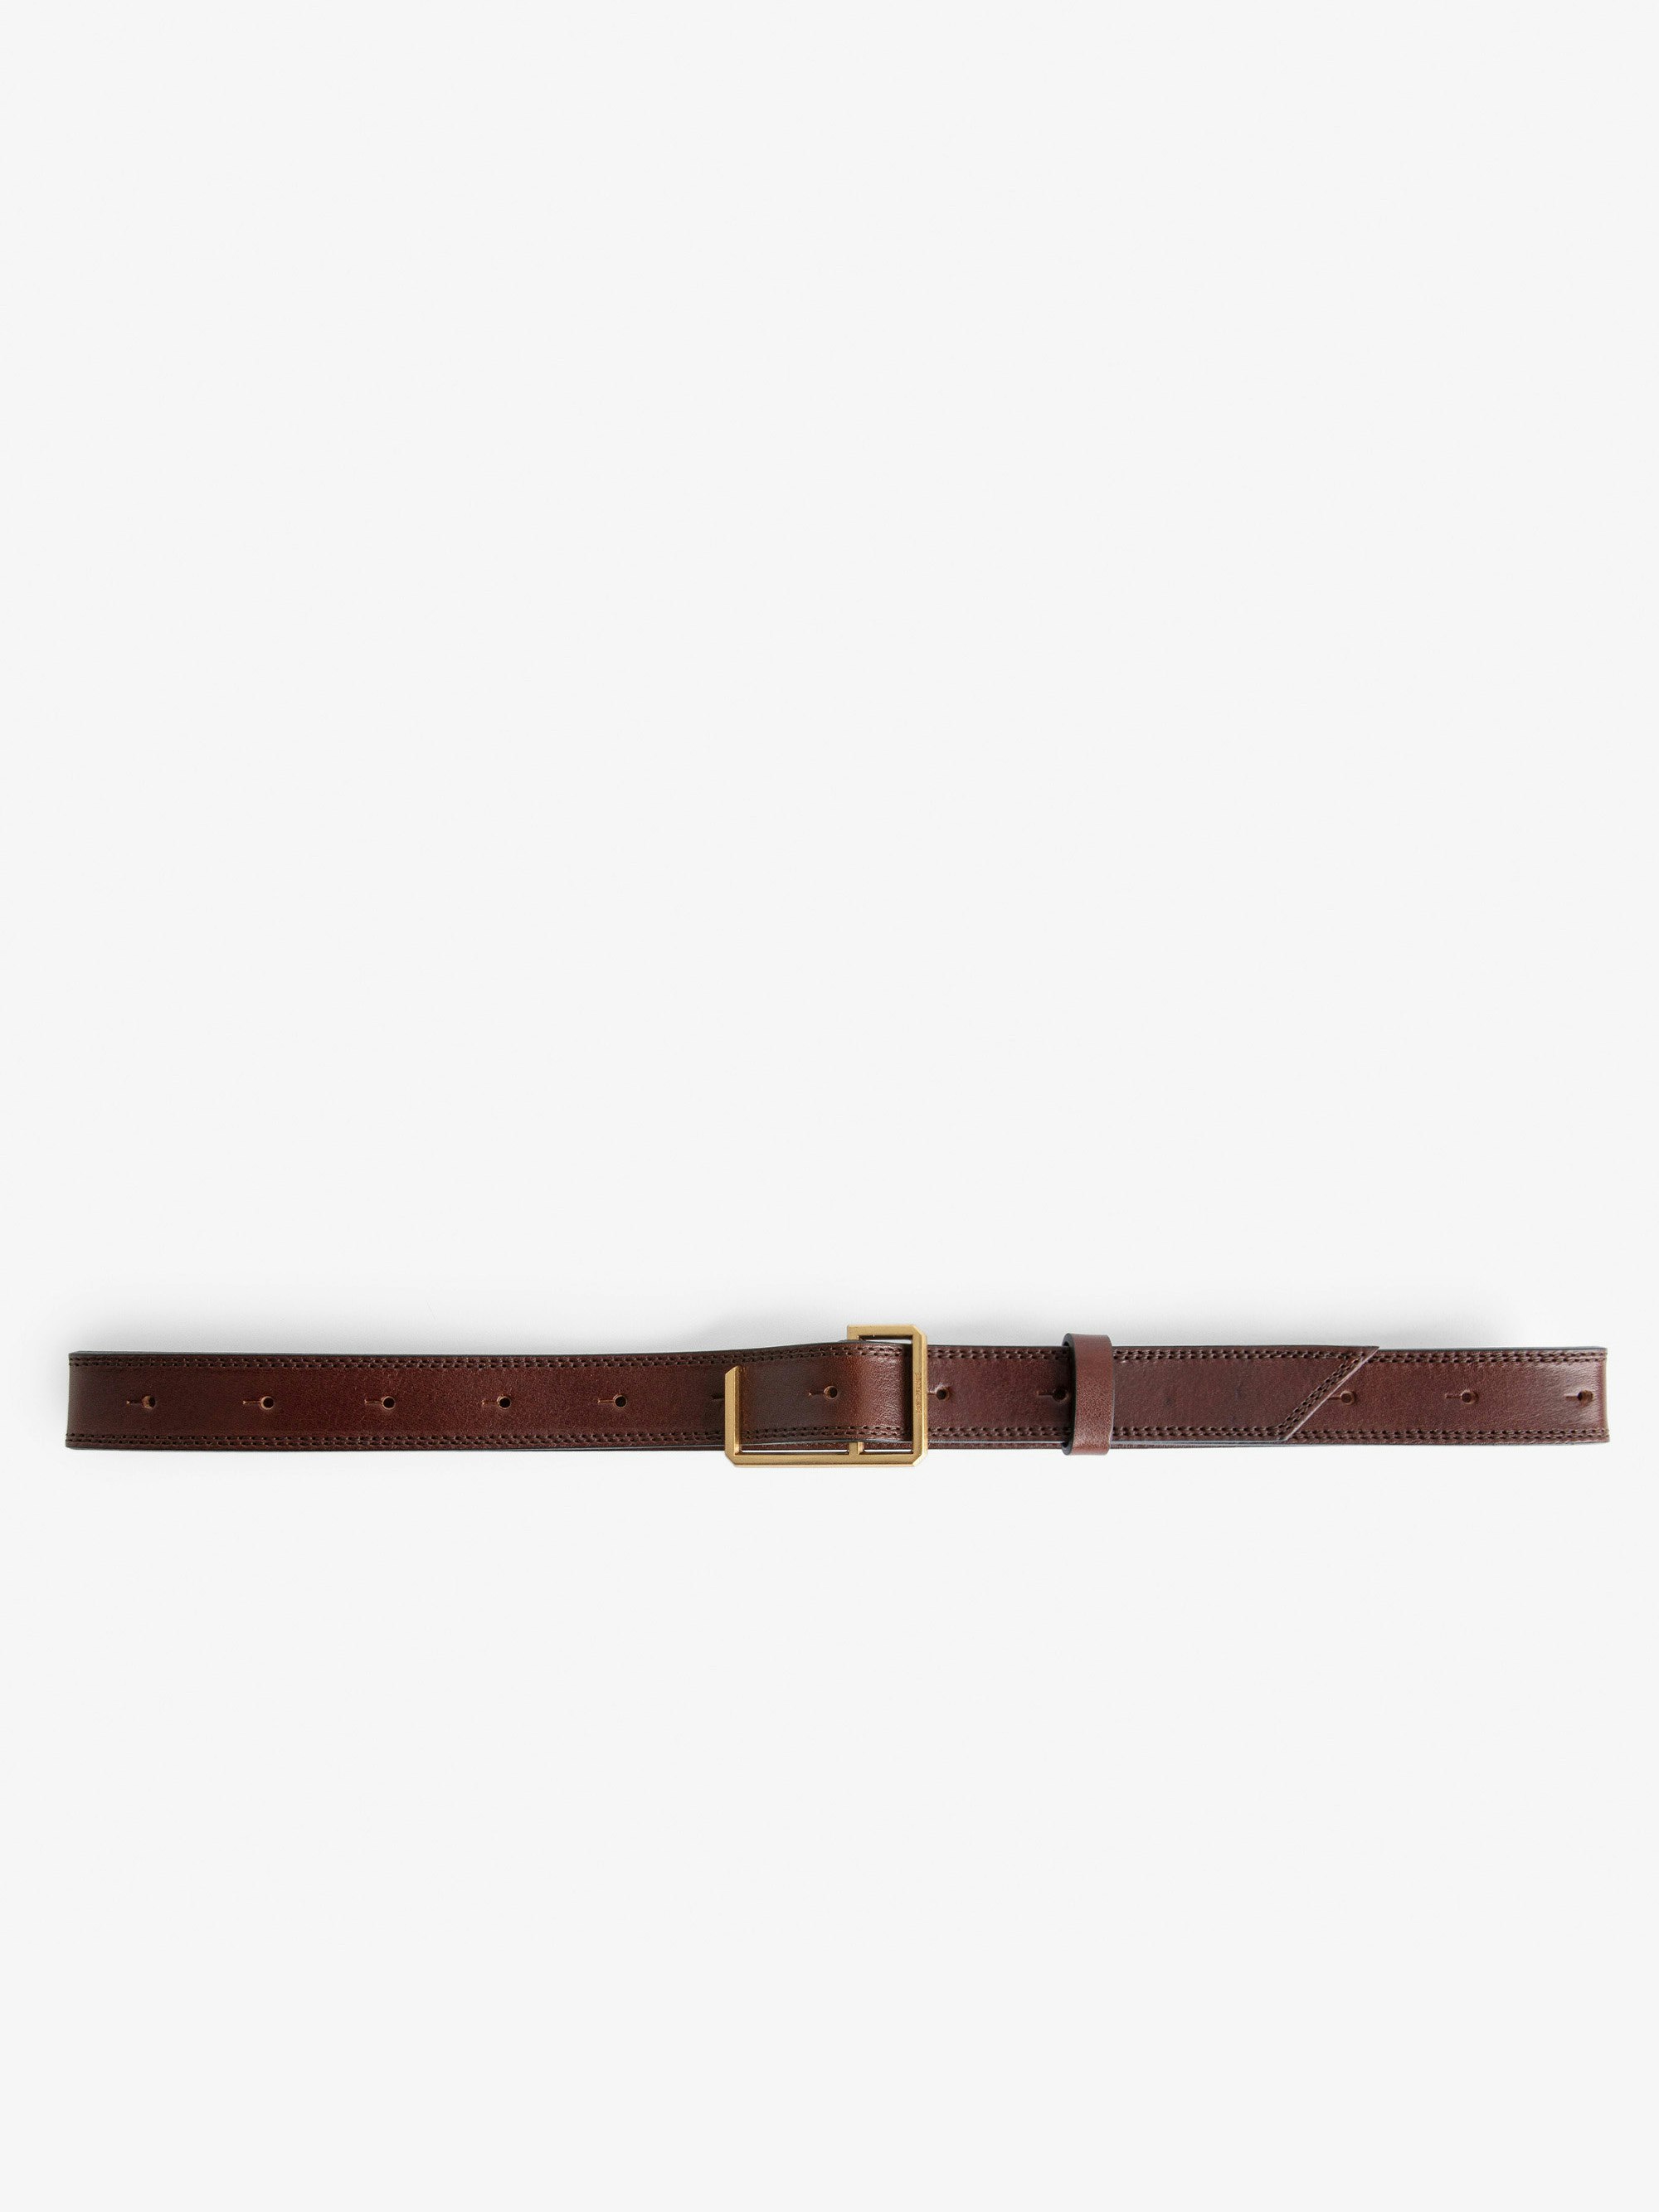 La Cecilia Obsession Belt - Adjustable brown vegetable-tanned leather belt with C buckle.